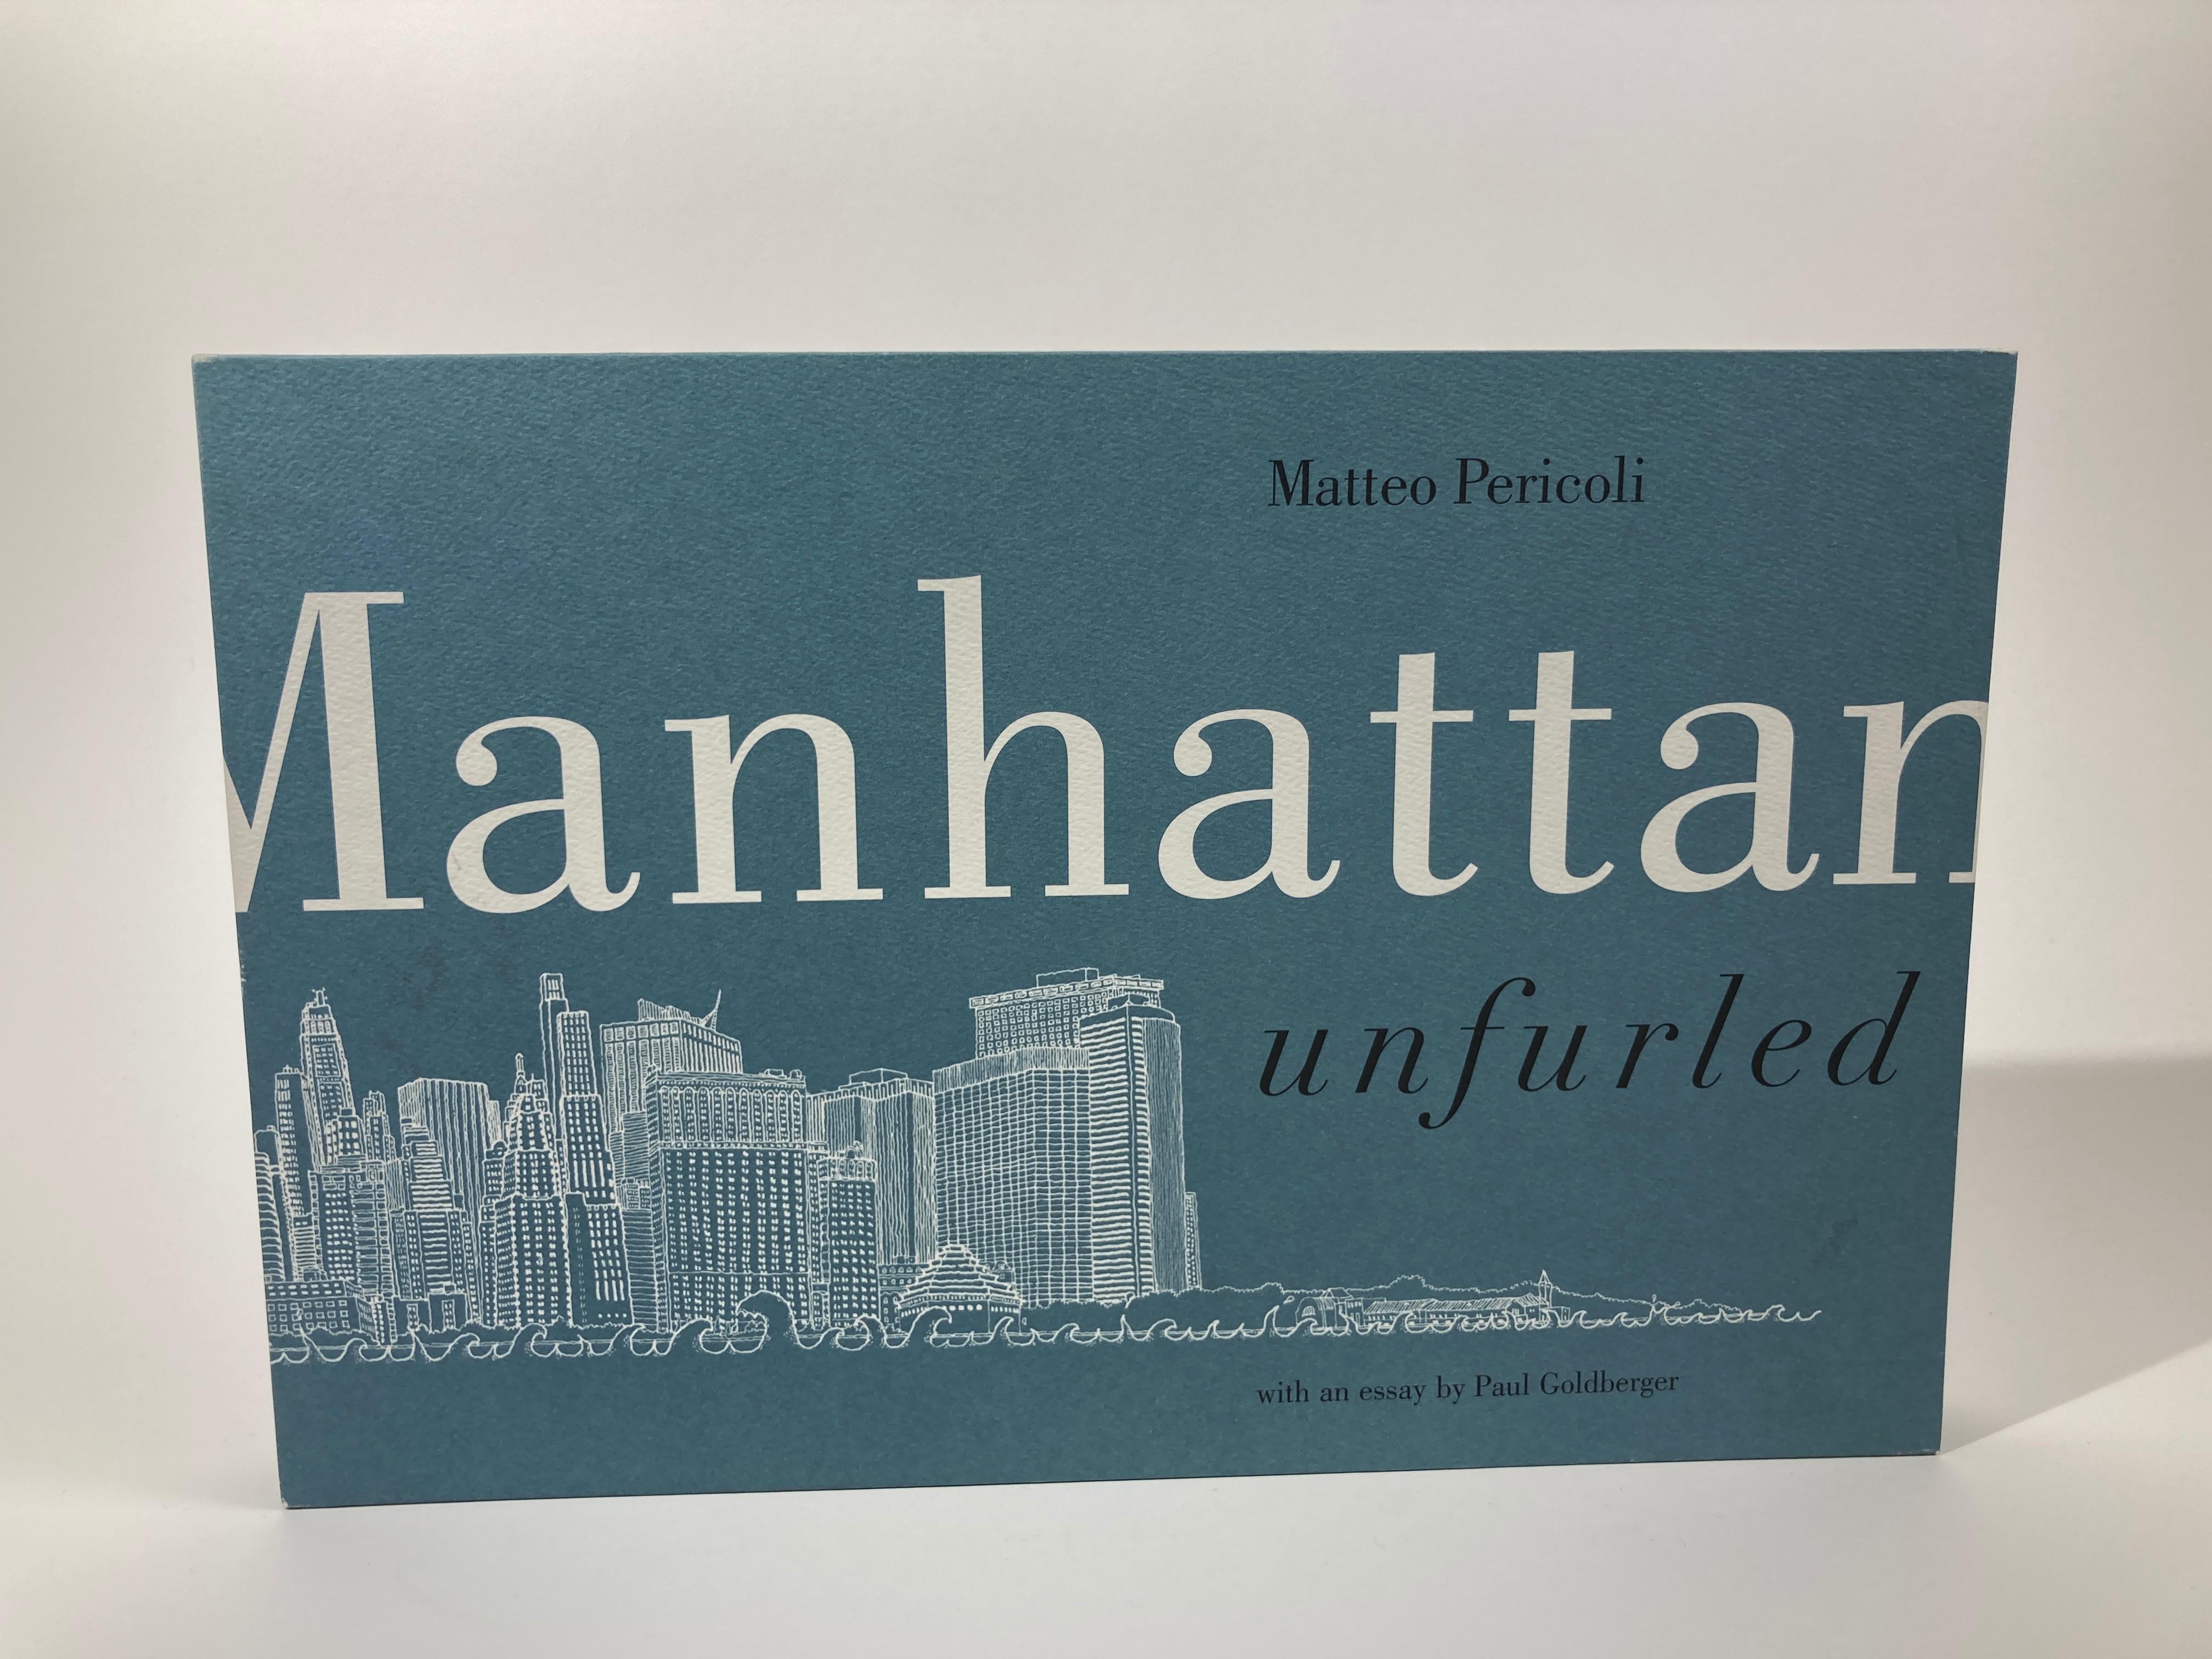 American Manhattan Unfurled Book by Matteo Pericoli For Sale